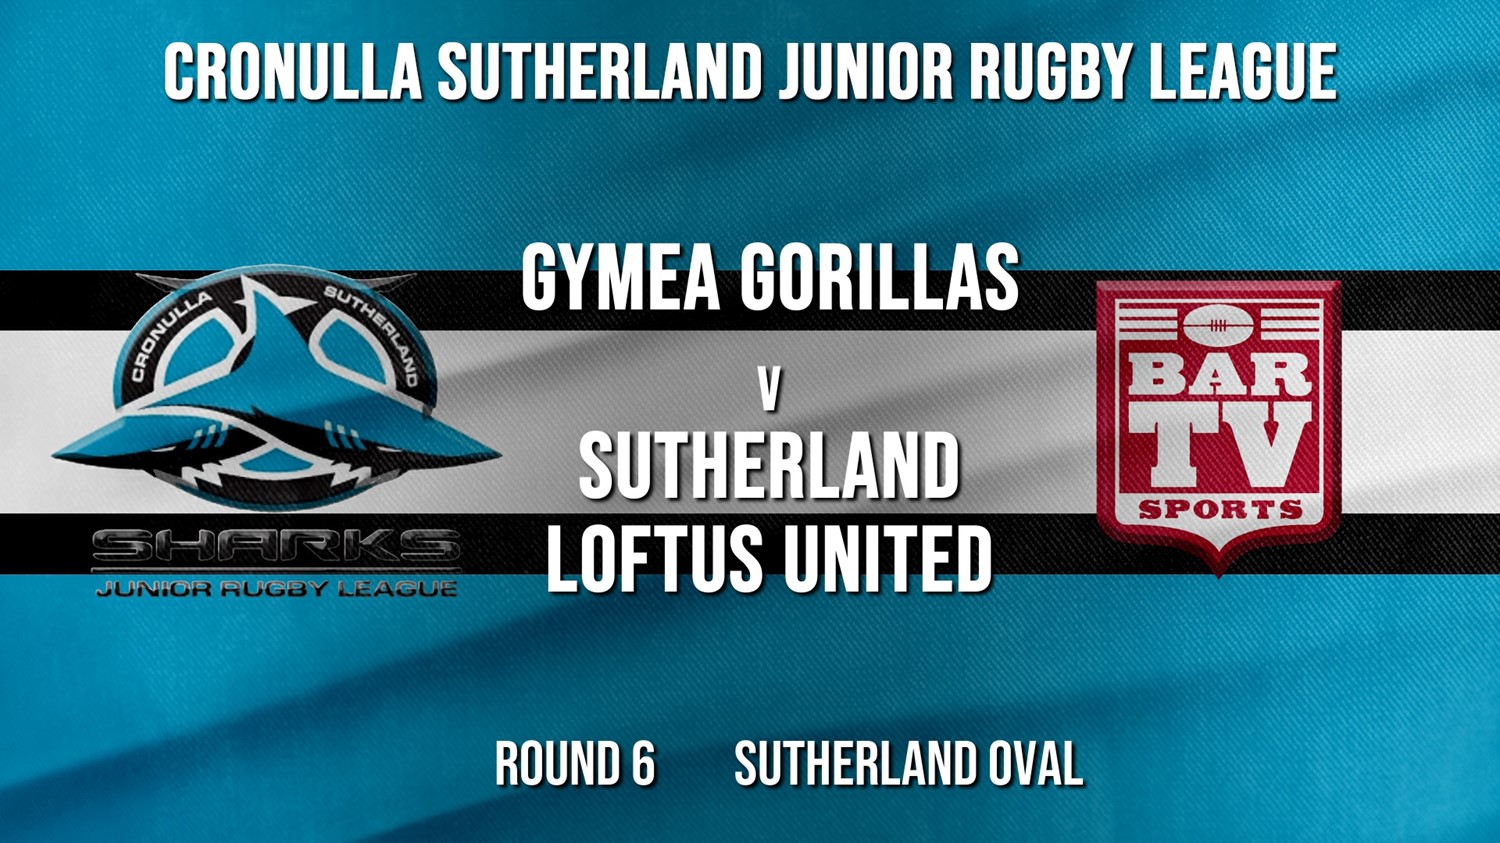 Cronulla JRL Round 6 - U/12 - Gymea Gorillas v Sutherland Loftus United Minigame Slate Image